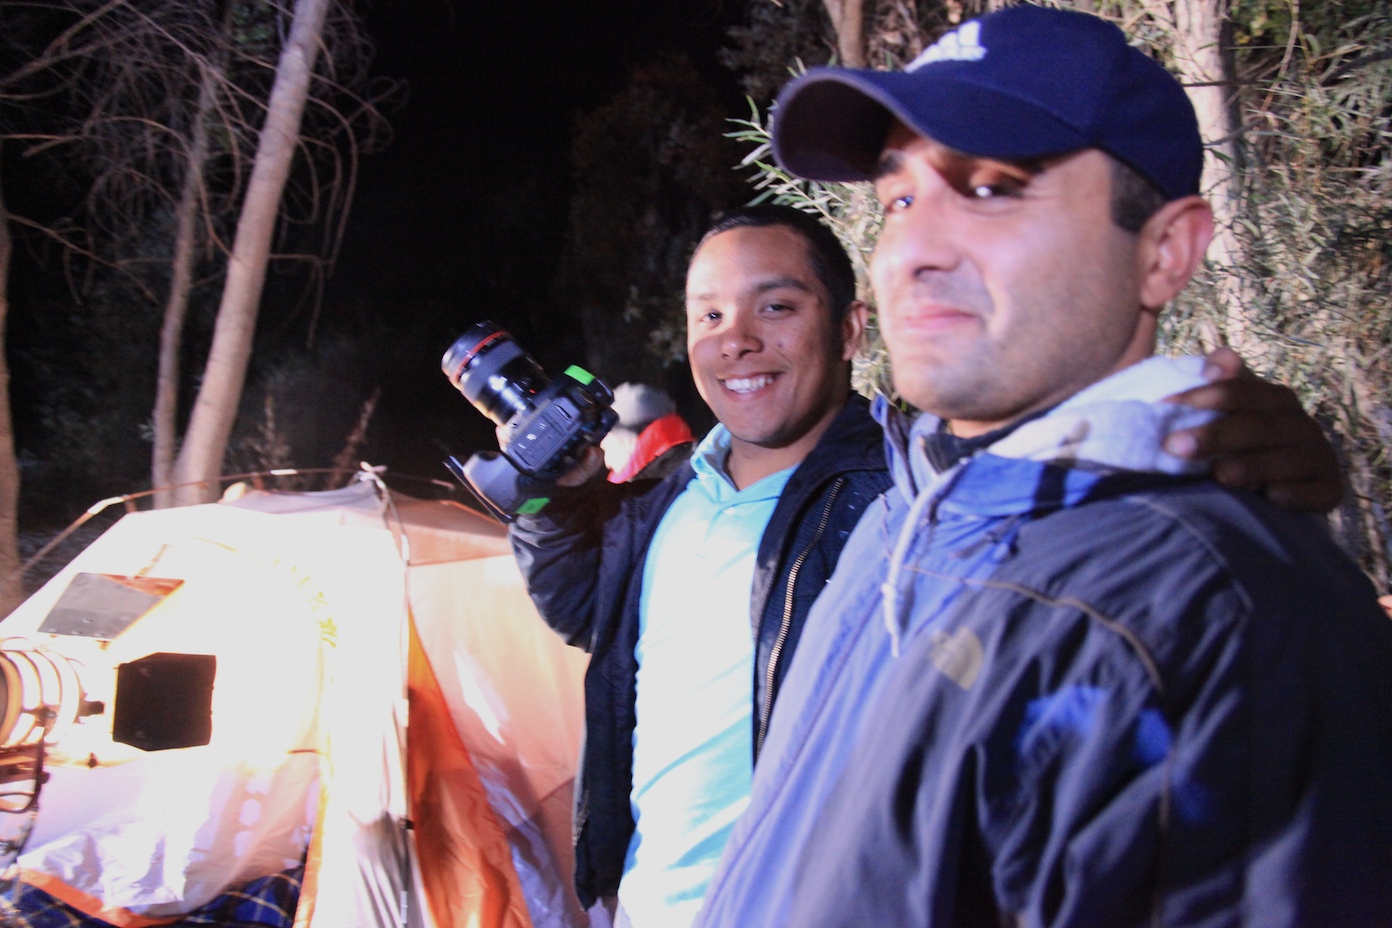 Cinematographer Peter Lugo and Camera Operator John Aguon on Location - The Pod